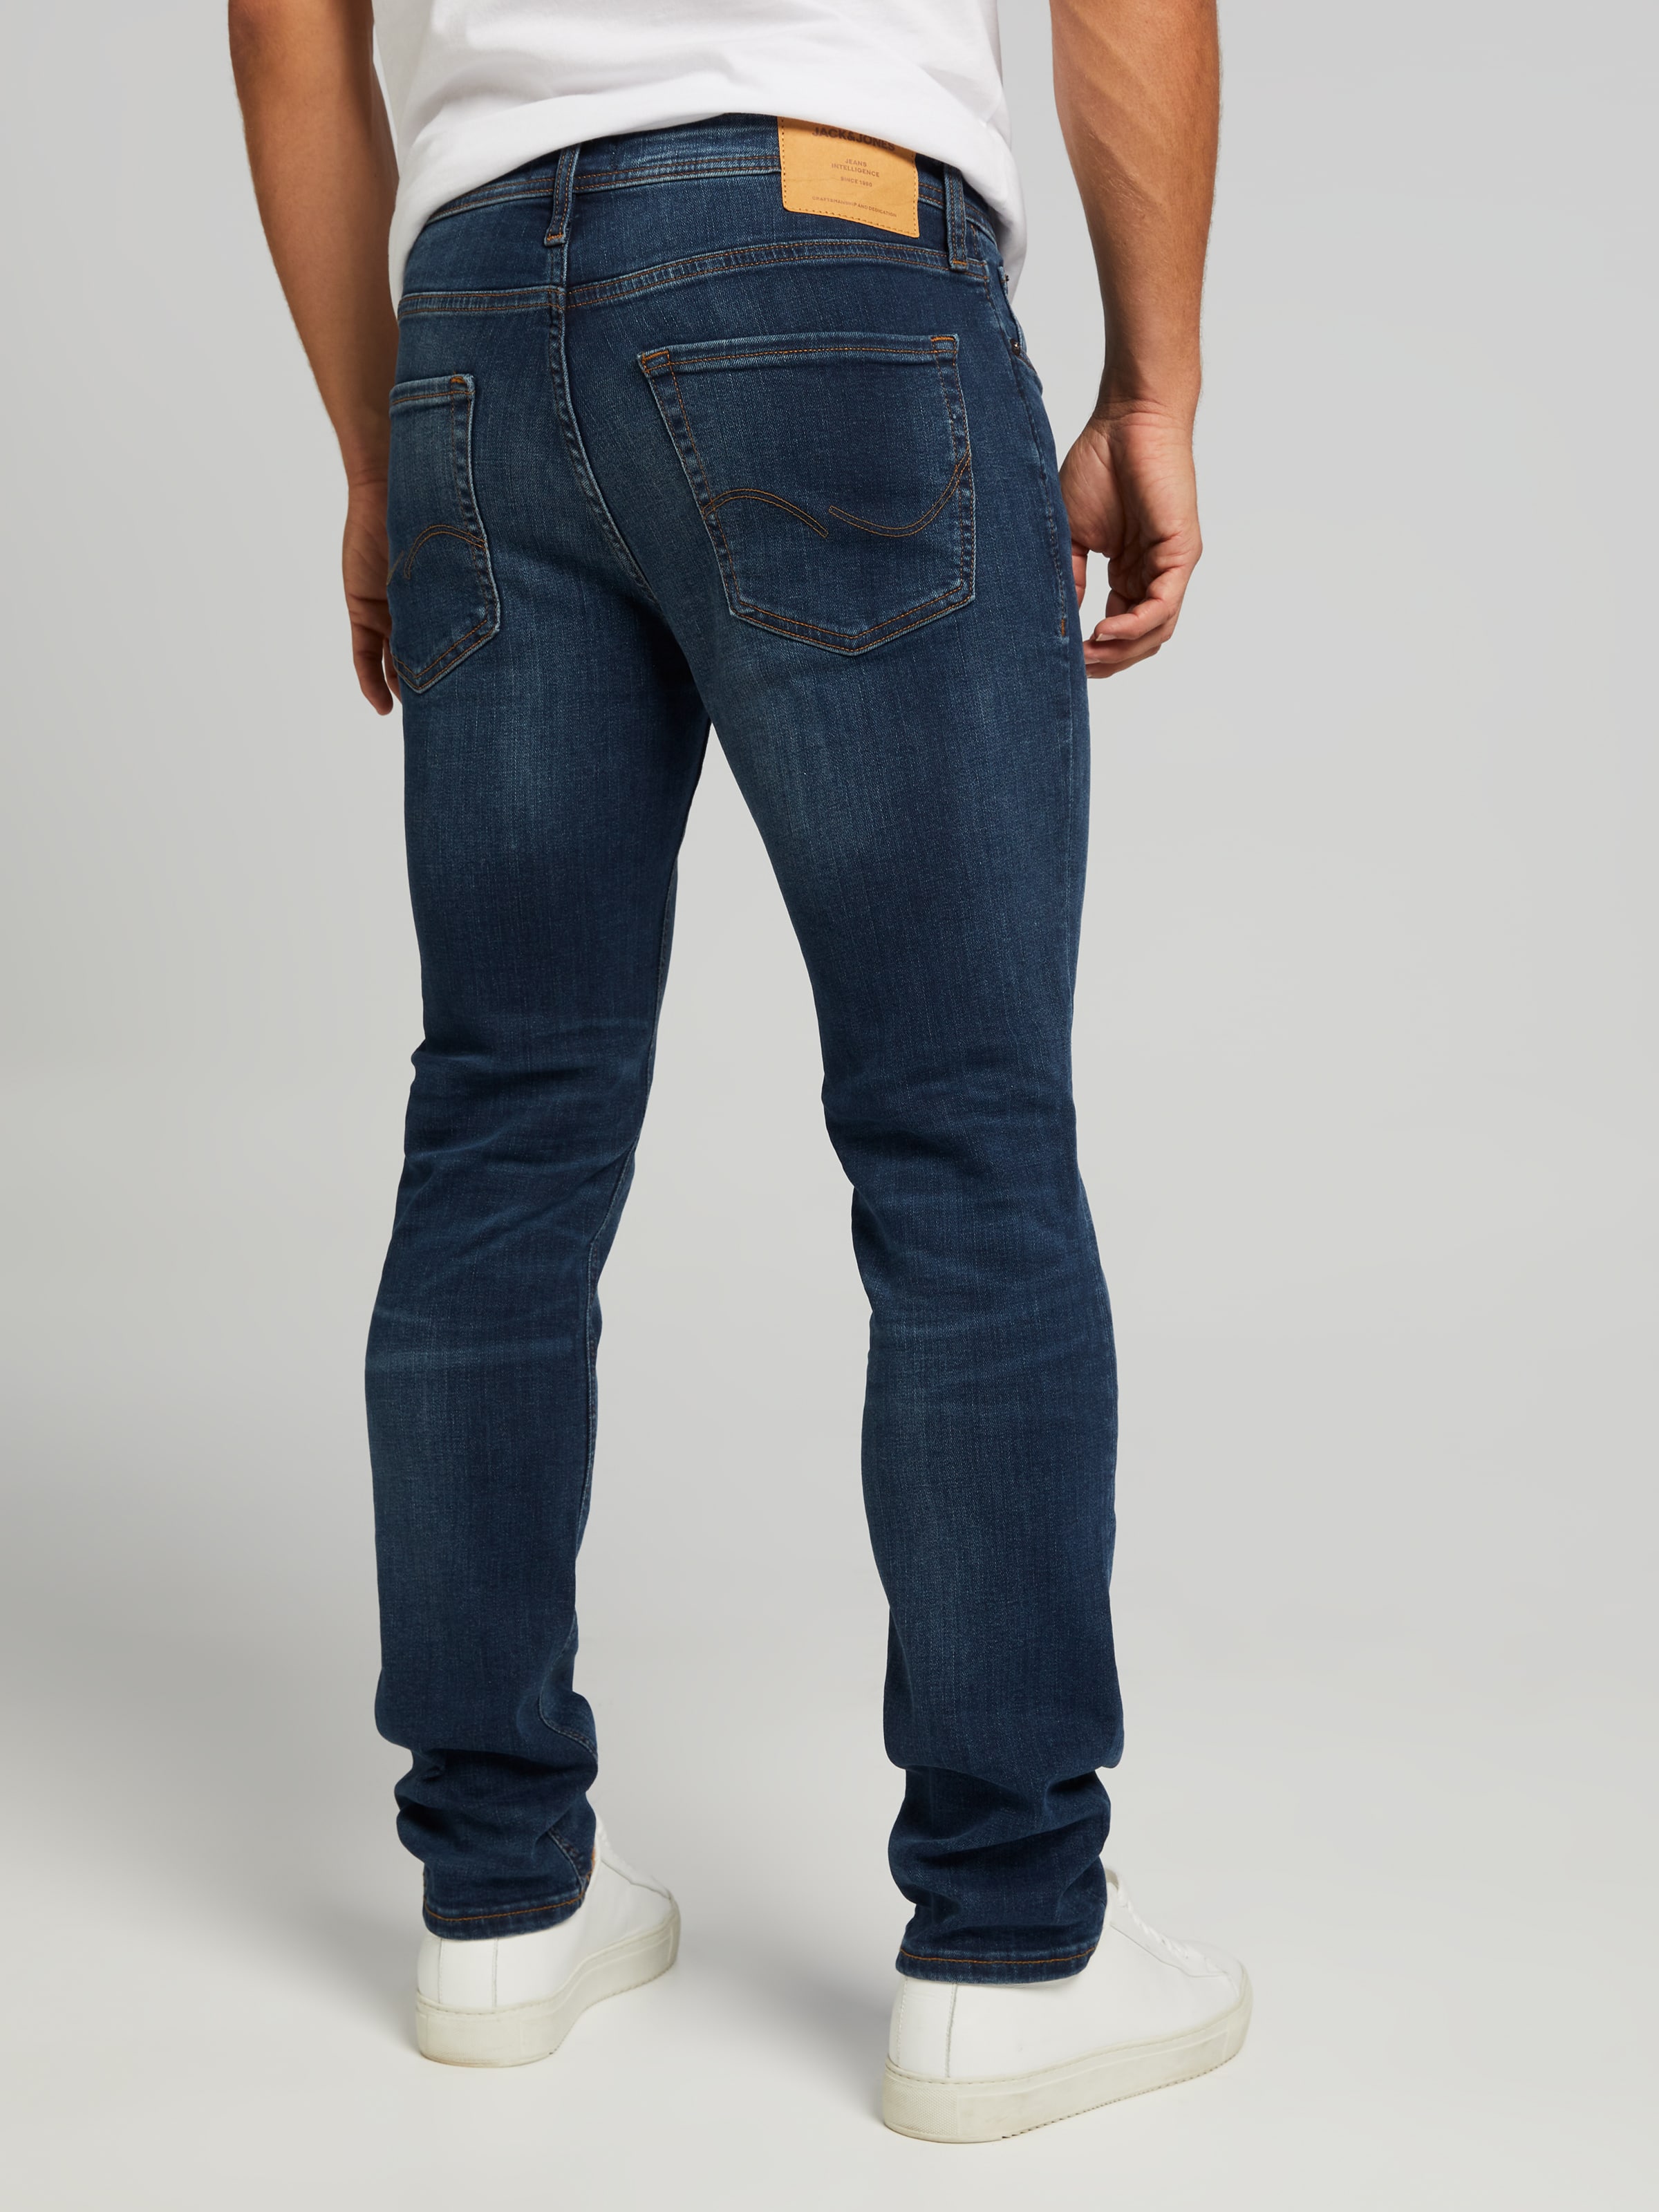 Mavi, Jeans, Mavi Molly Midrise Classic Bootcut Jeans Size 2832